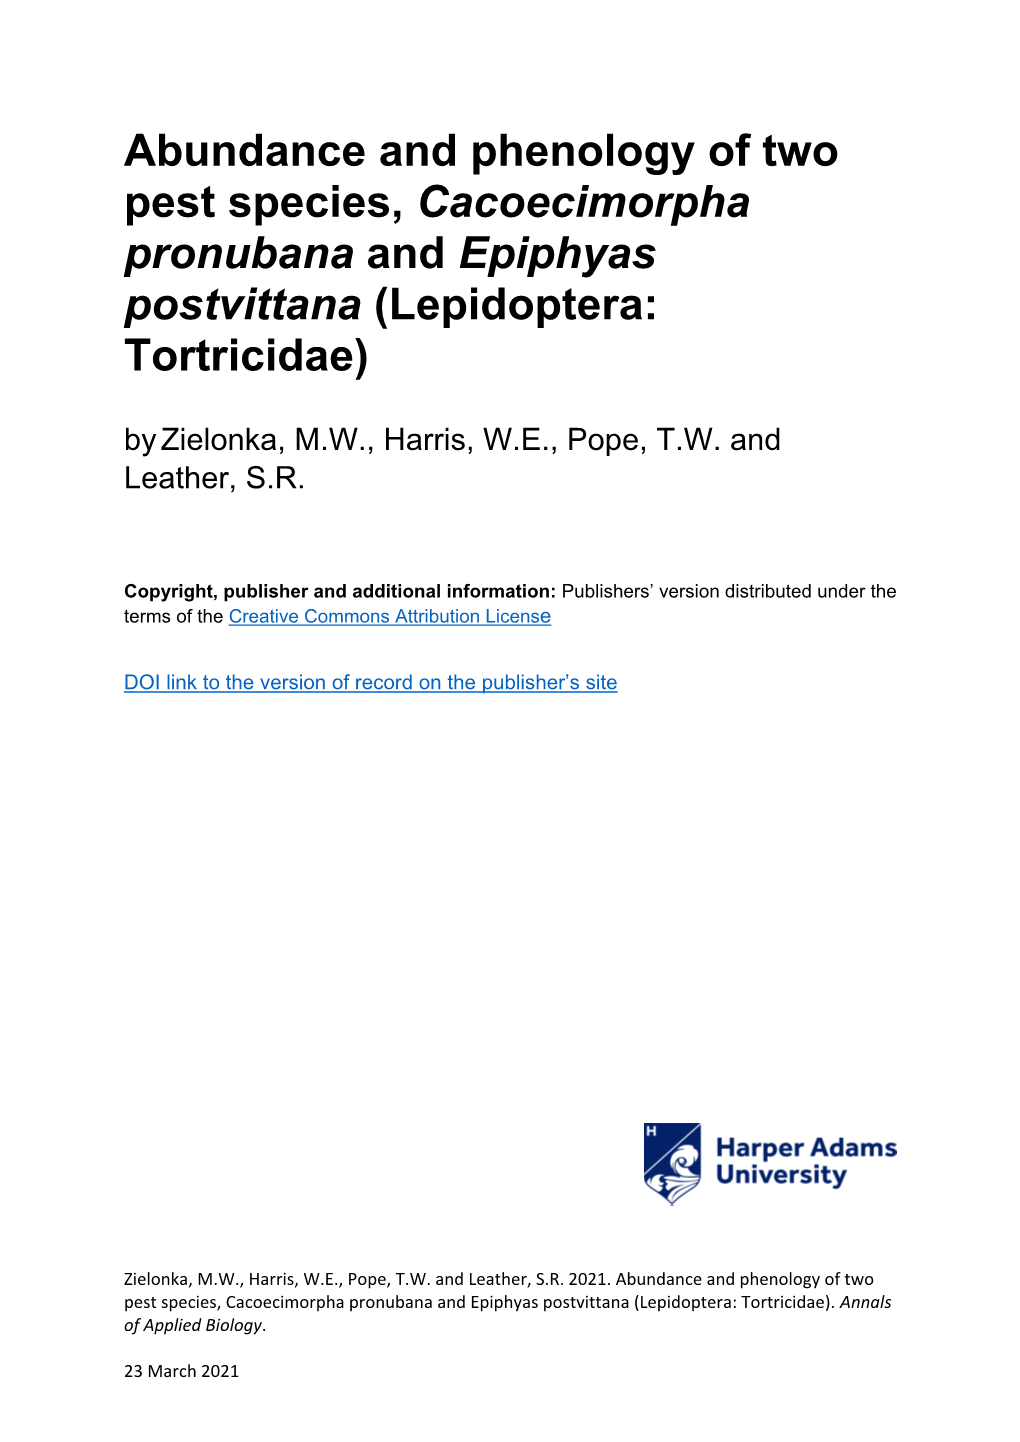 Abundance and Phenology of Two Pest Species, Cacoecimorpha Pronubana and Epiphyas Postvittana (Lepidoptera: Tortricidae) by Zielonka, M.W., Harris, W.E., Pope, T.W